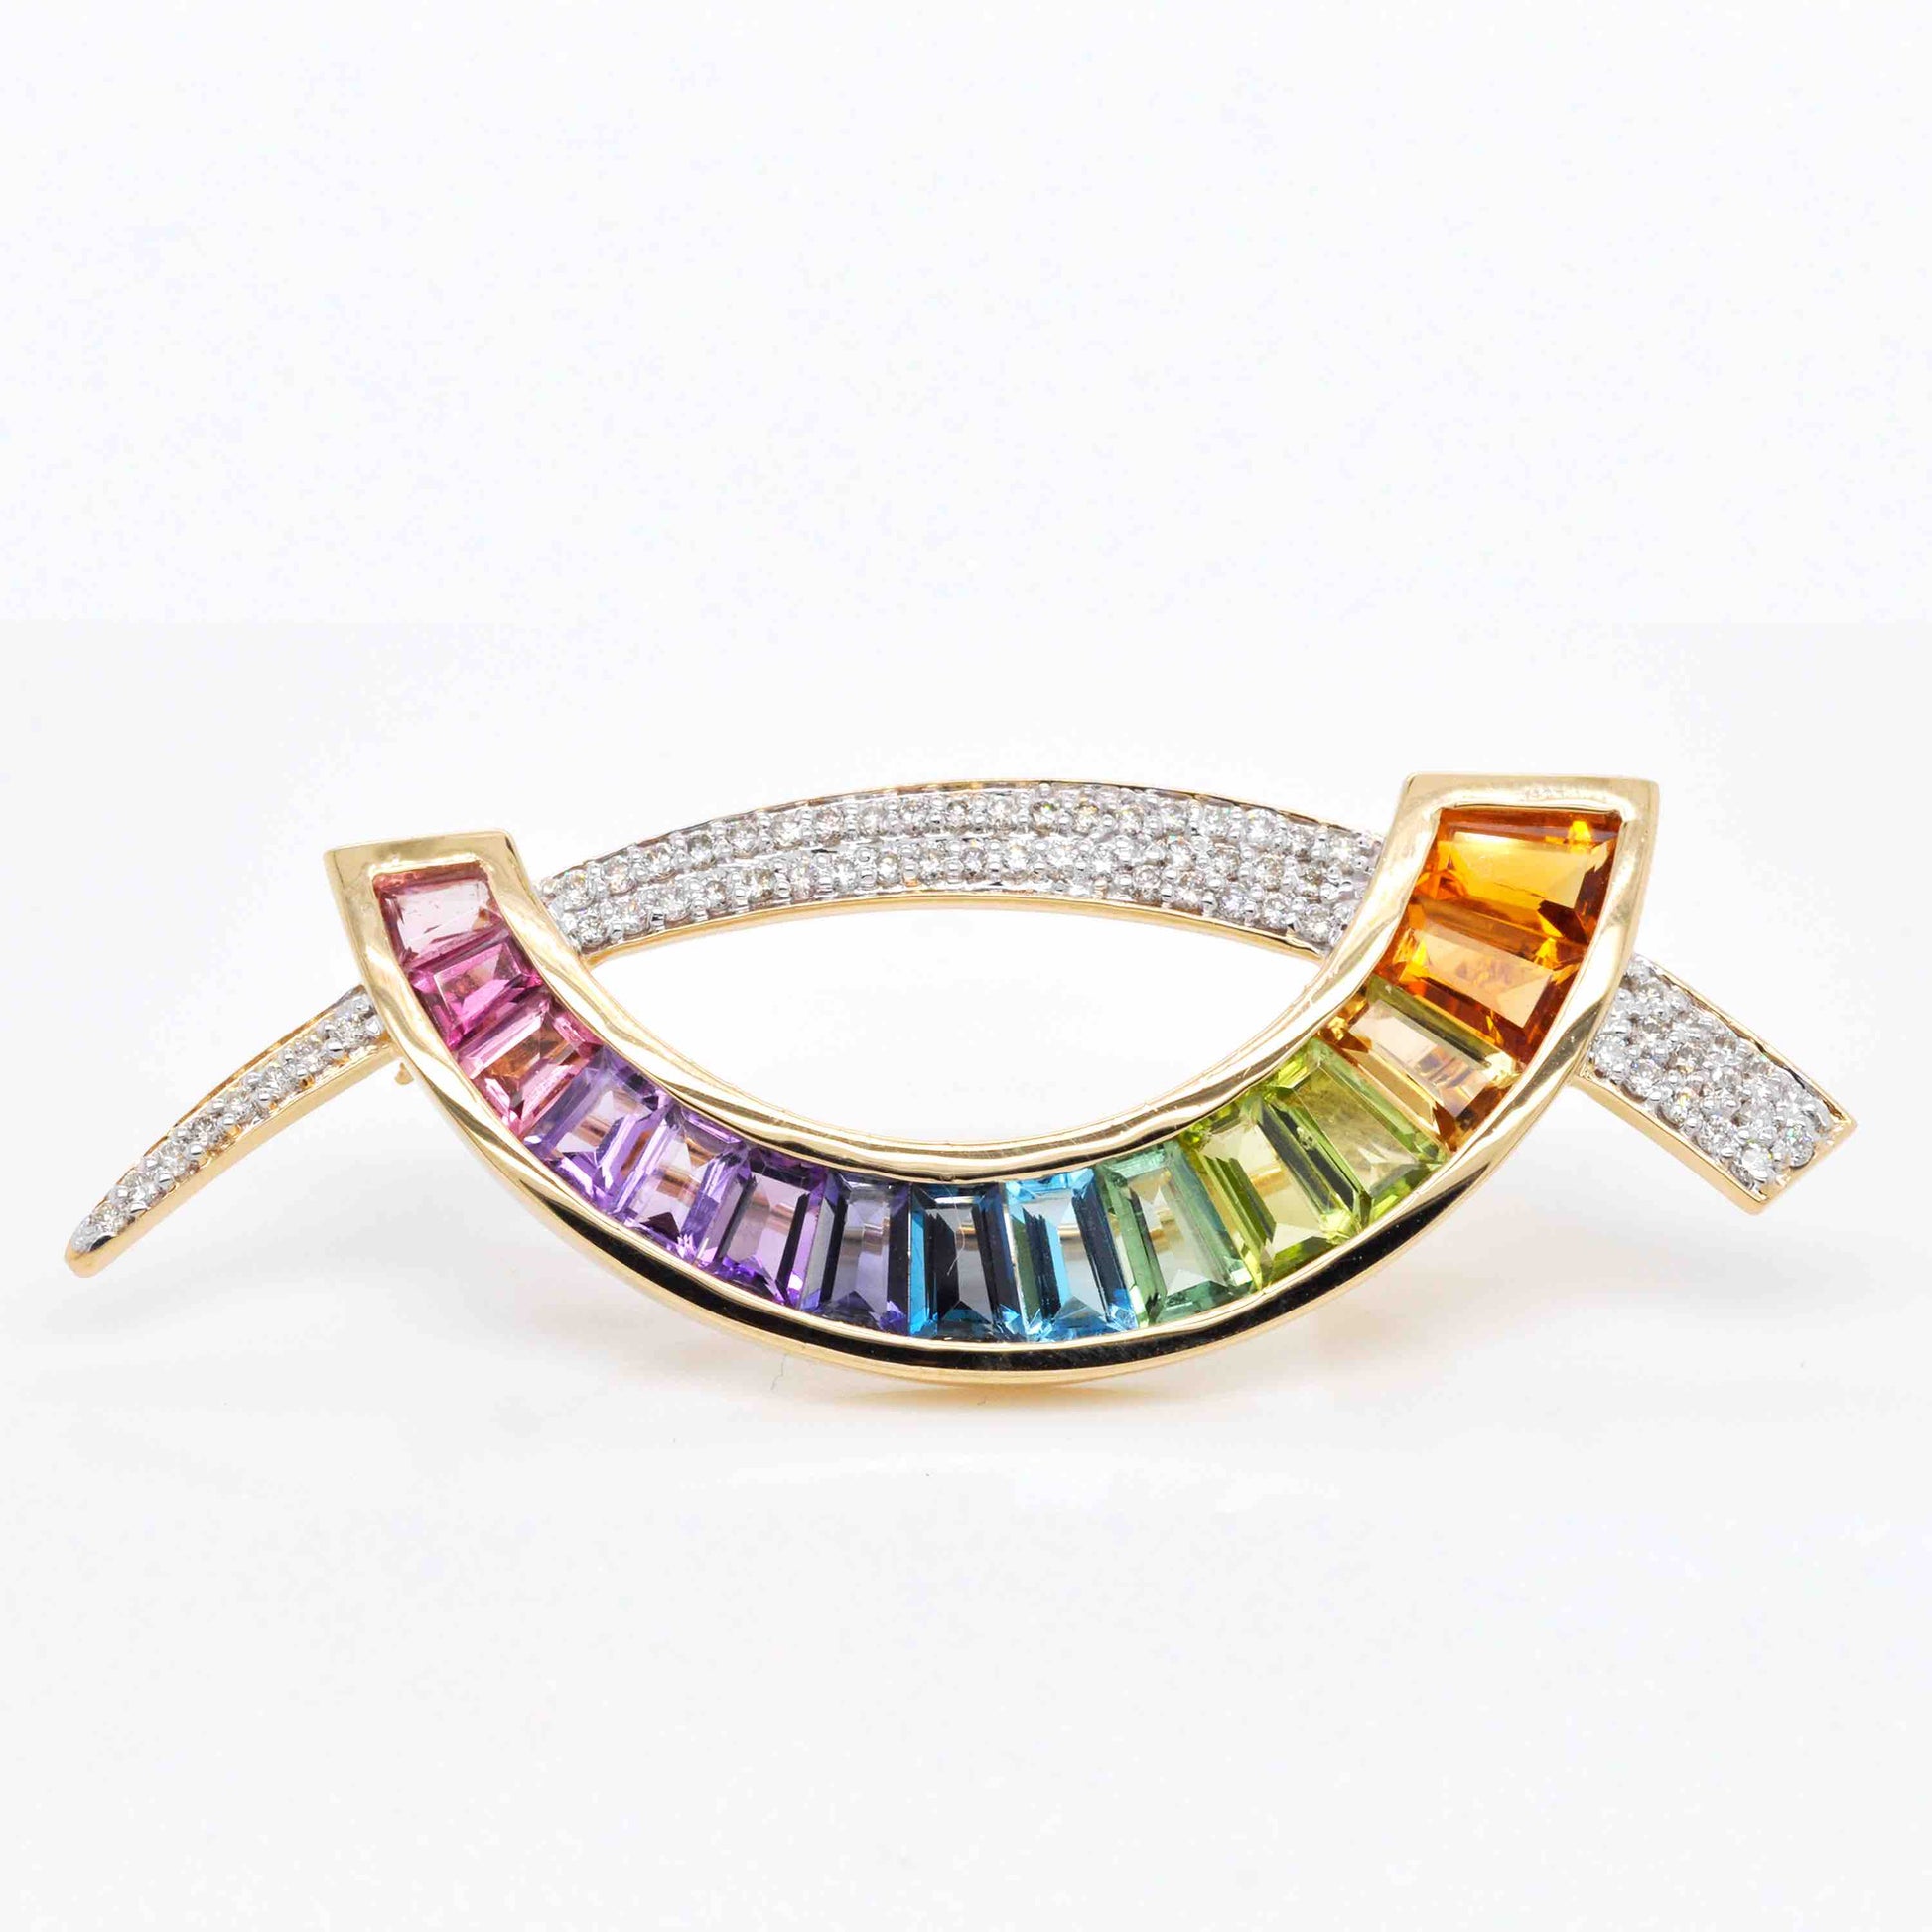 Buy 18K gold diamond pendant brooch